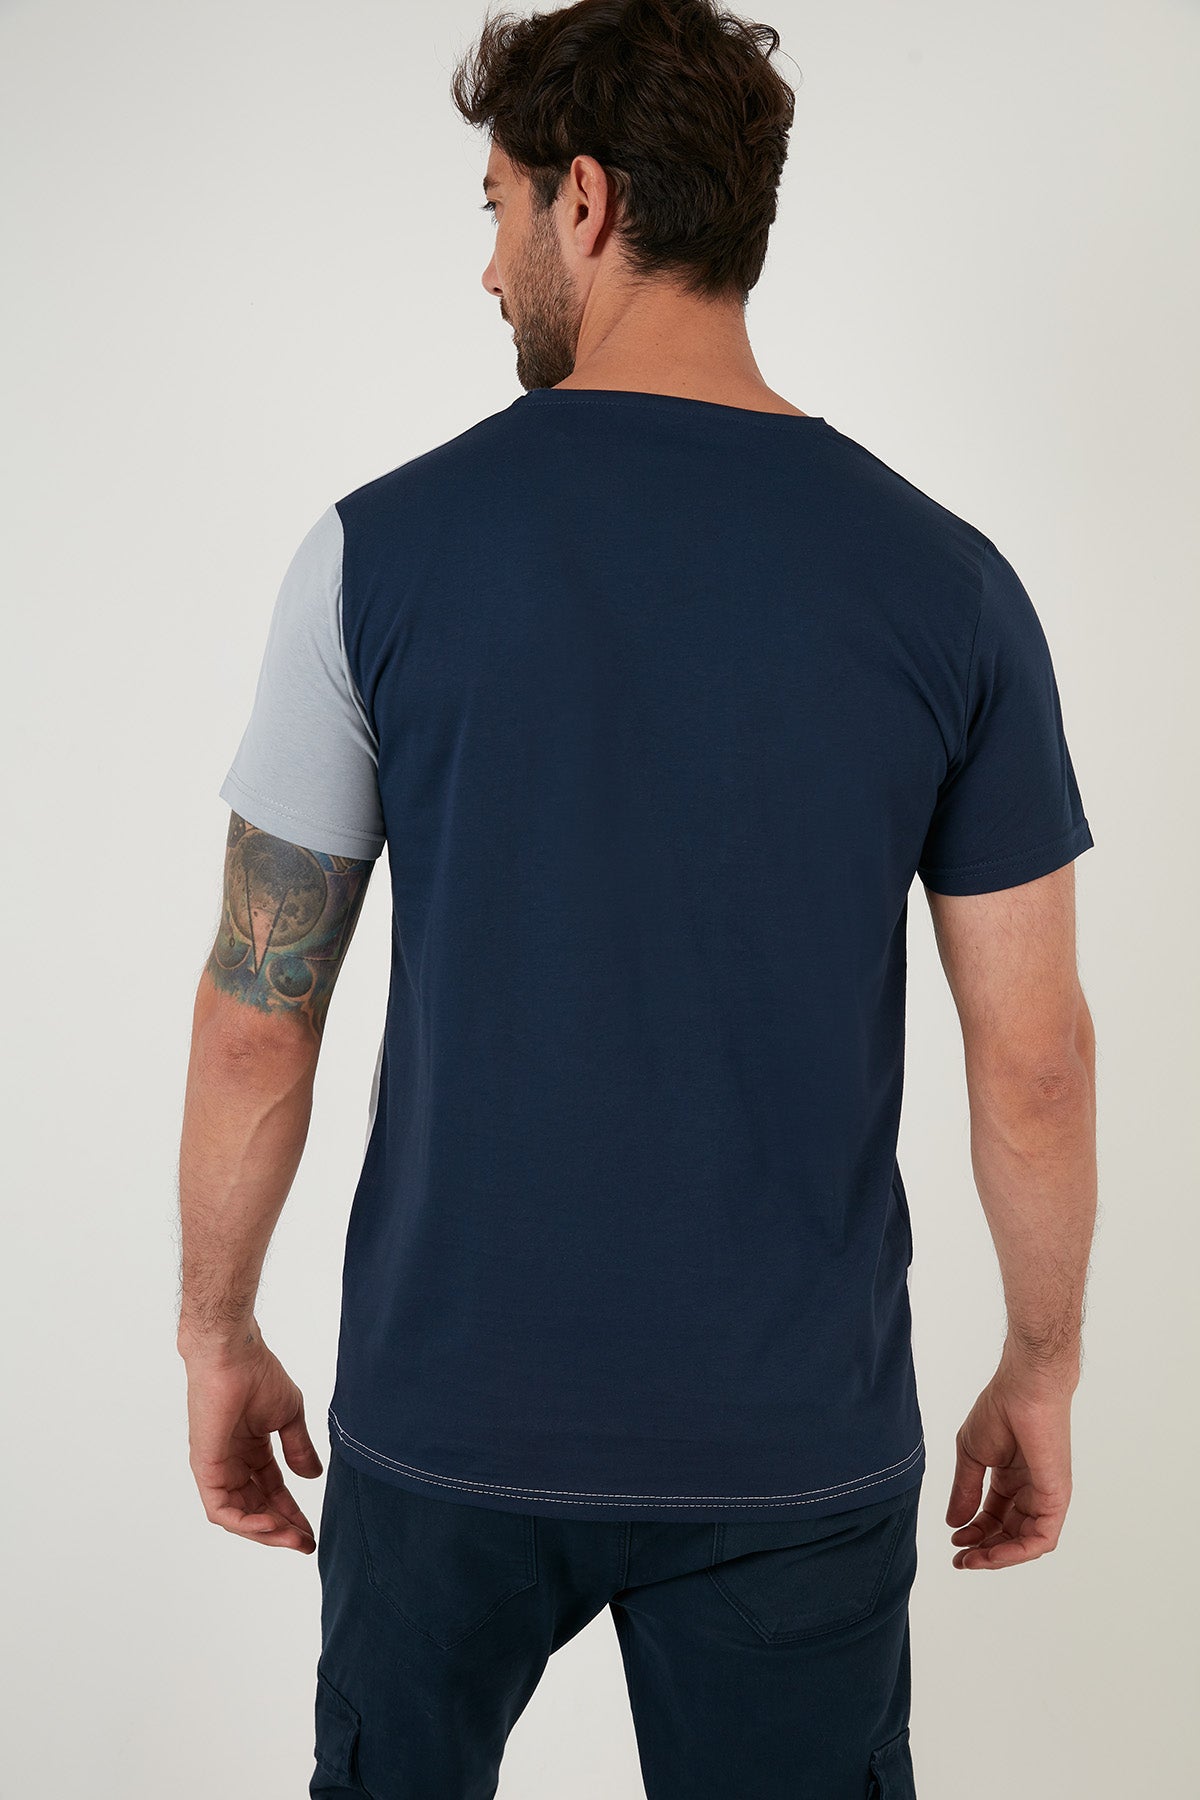 Buratti Regular Fit Color Block Crew Neck 100% Cotton Men's T Shirt - Mint-Grey-White